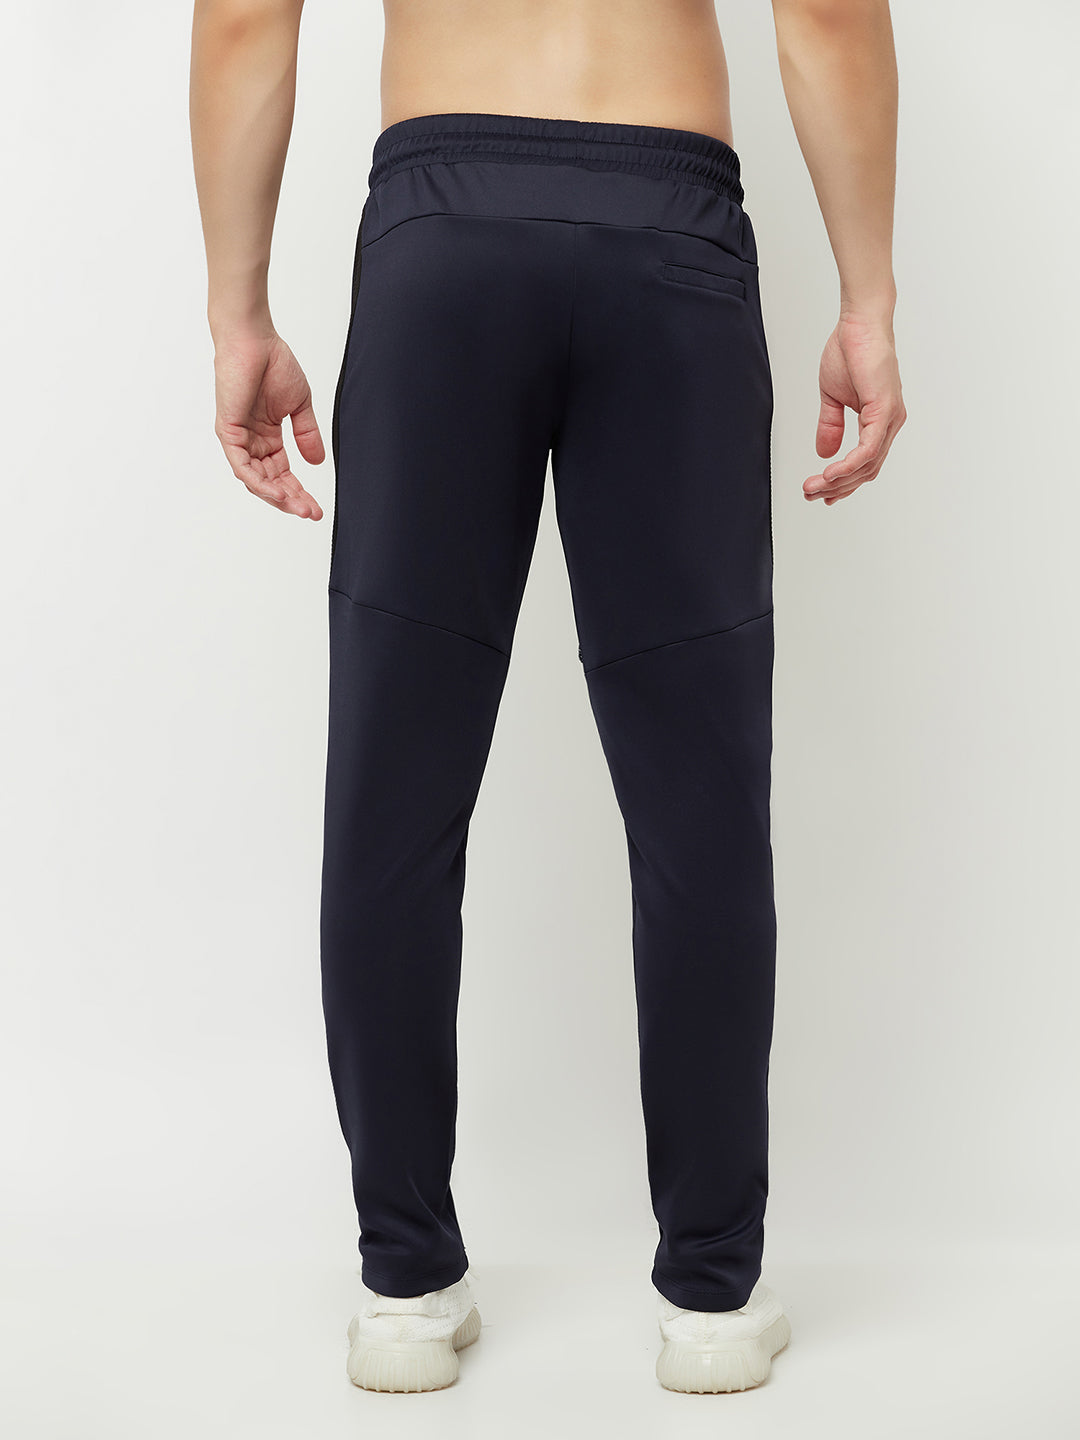 3 pc Combo - Shorts Black, & Light Dry Fit Tshirt - Wine & Track Black